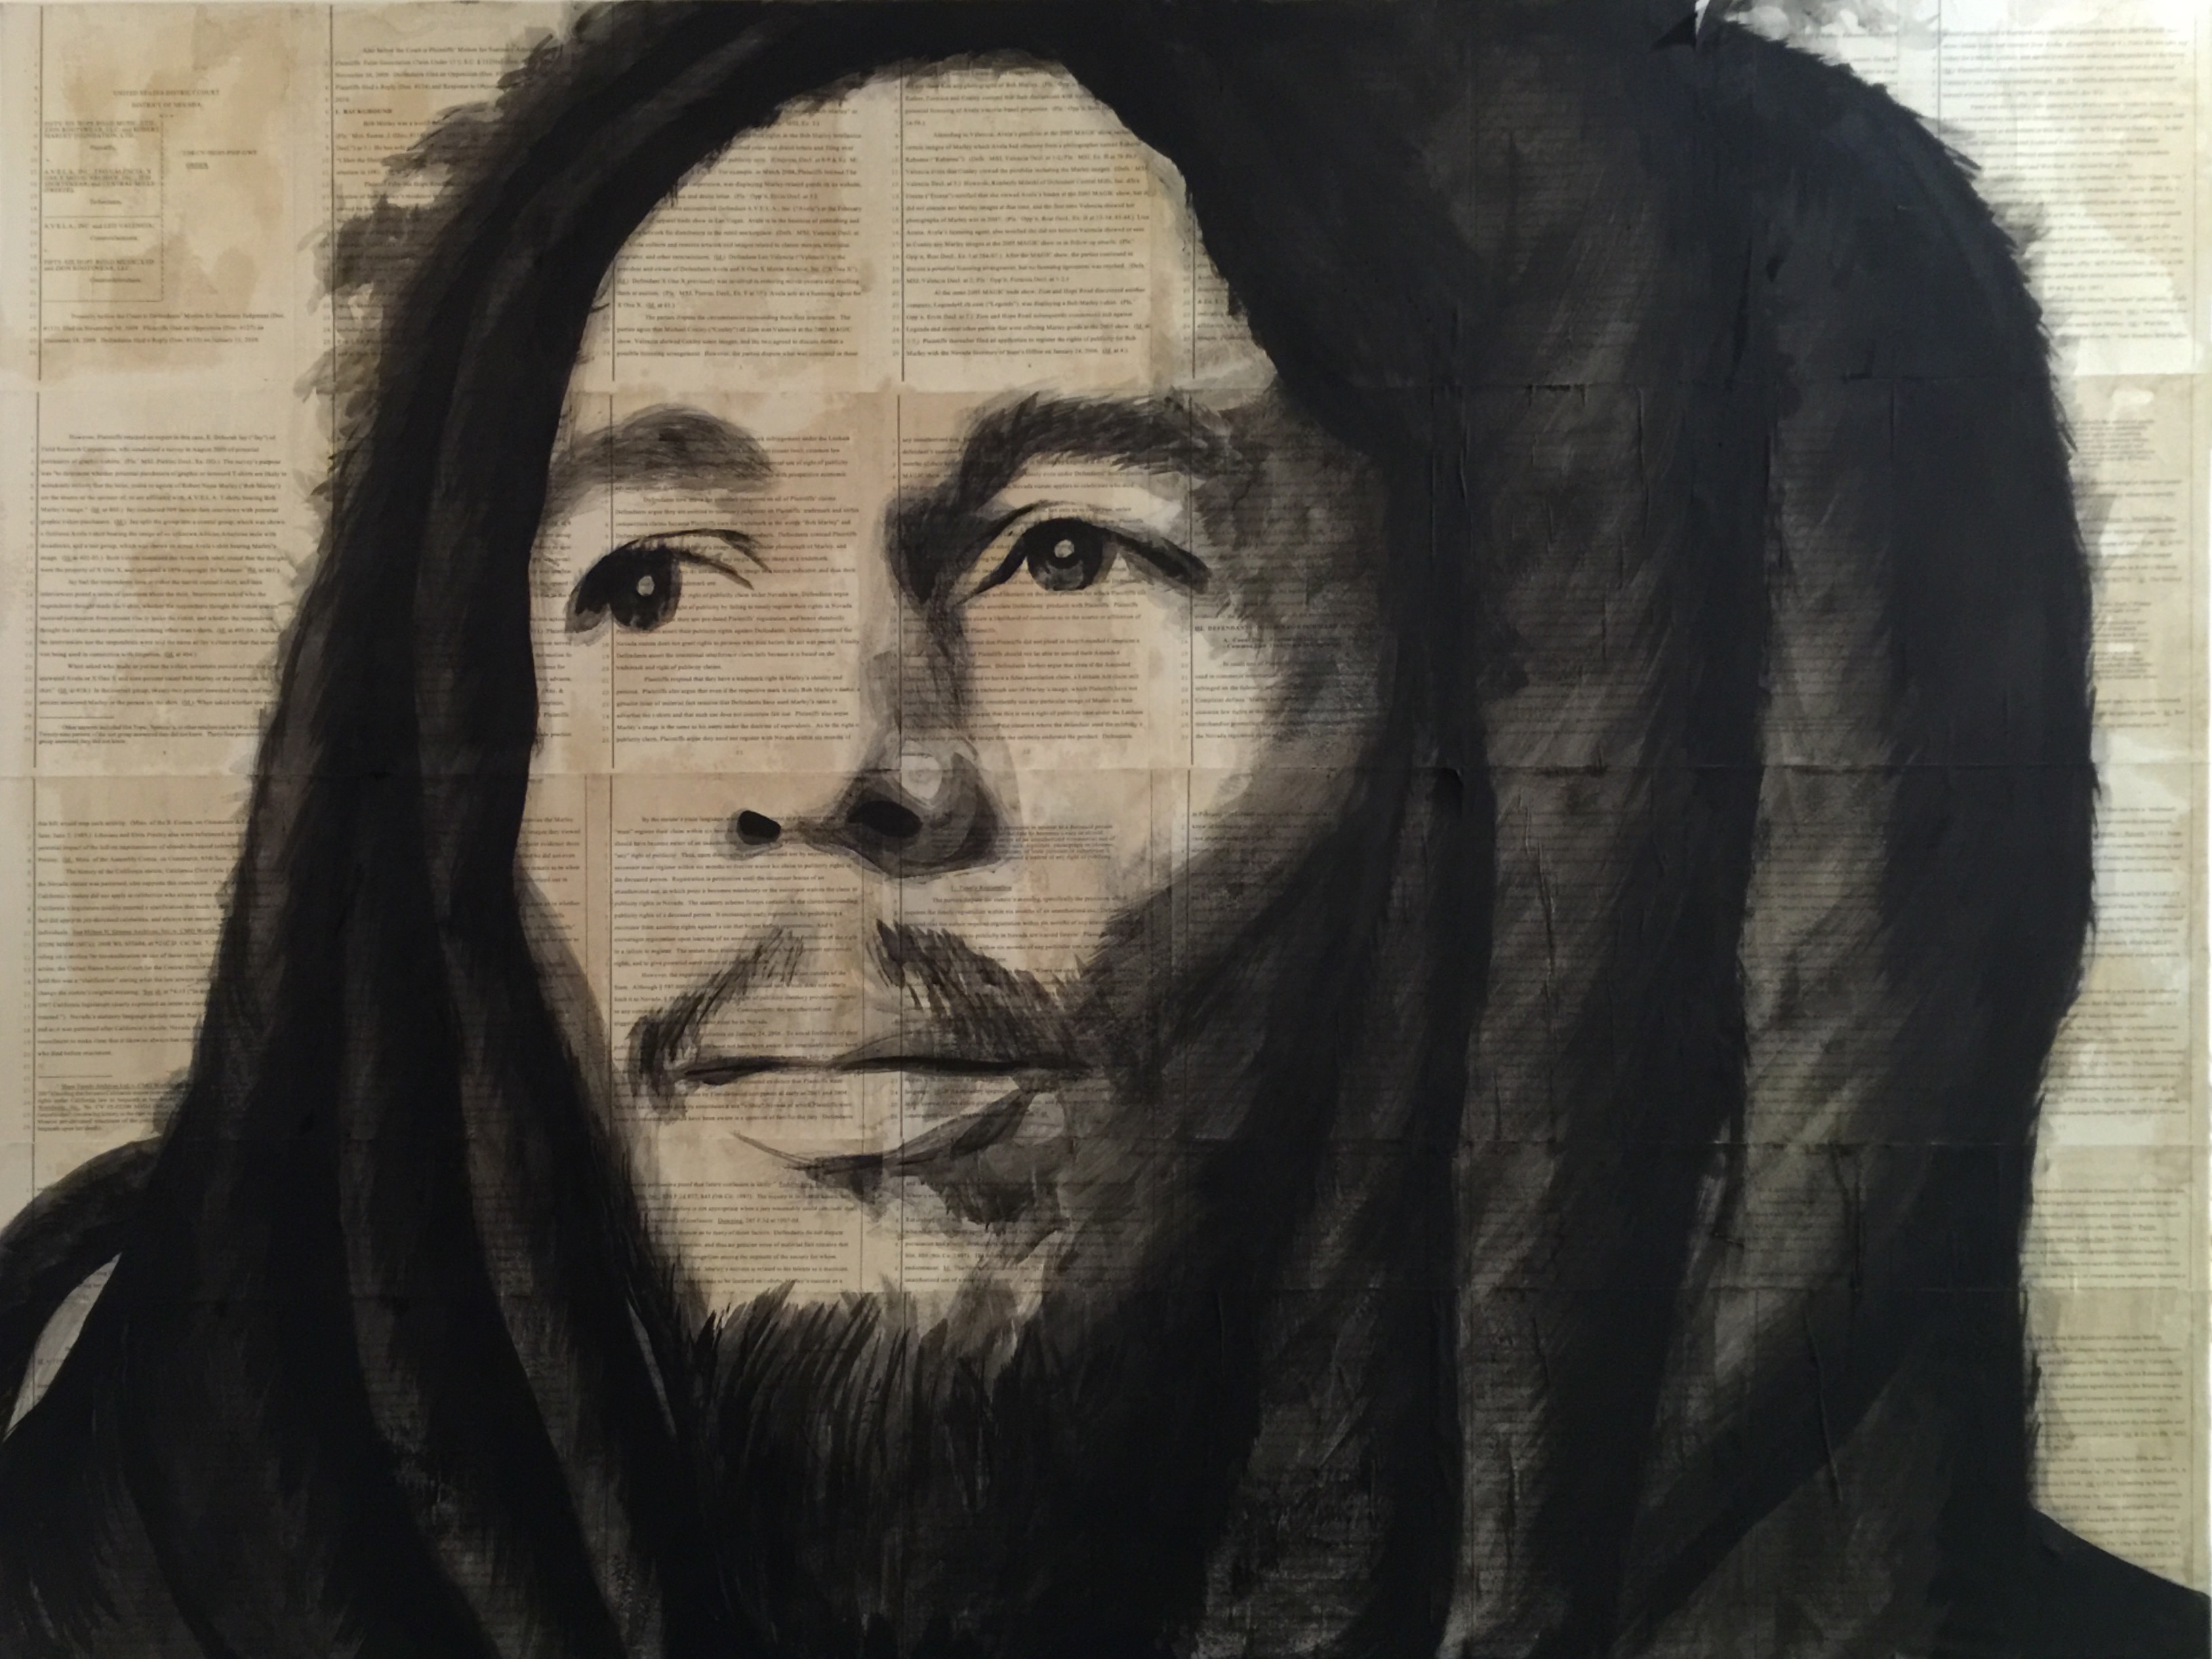 Exhibit 6: Bob Marley